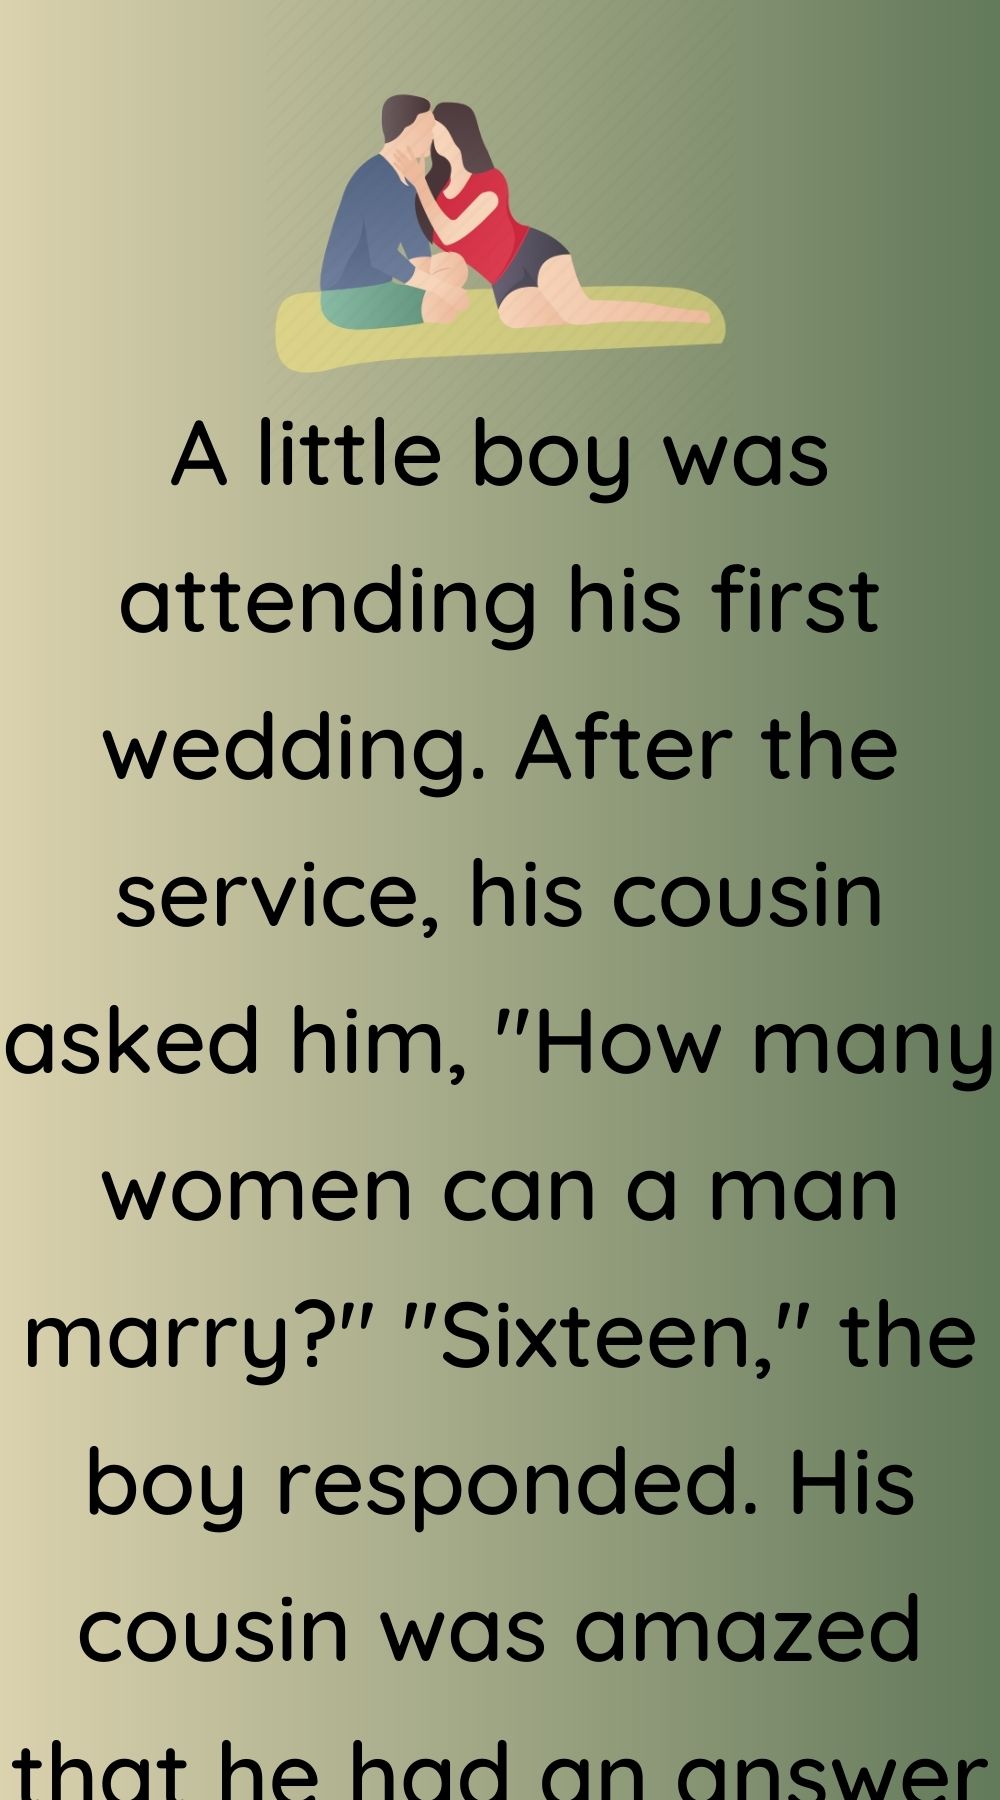 A little boy was attending his first wedding